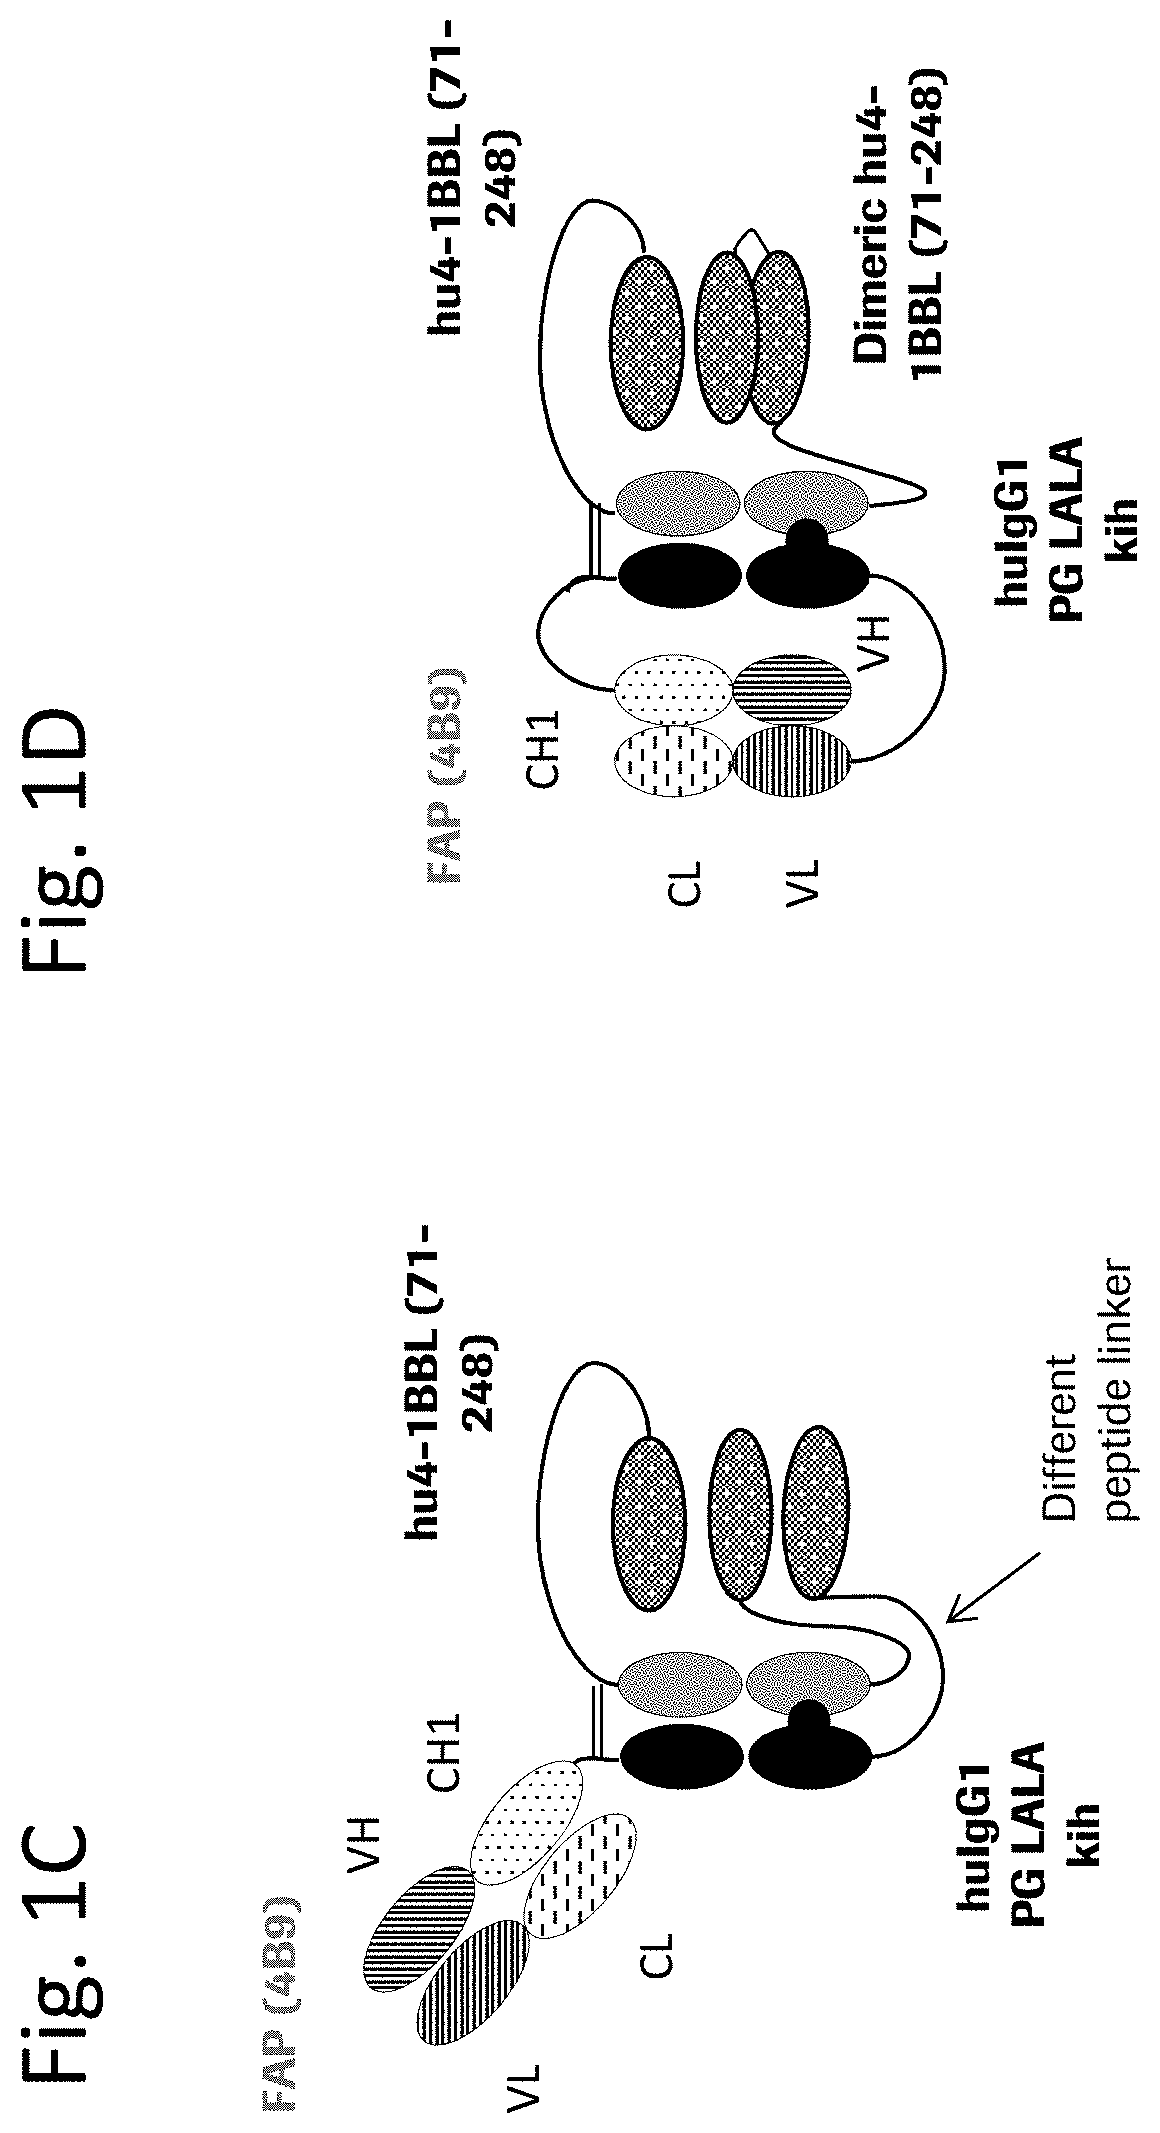 Novel TNF family ligand trimer-containing antigen binding molecules